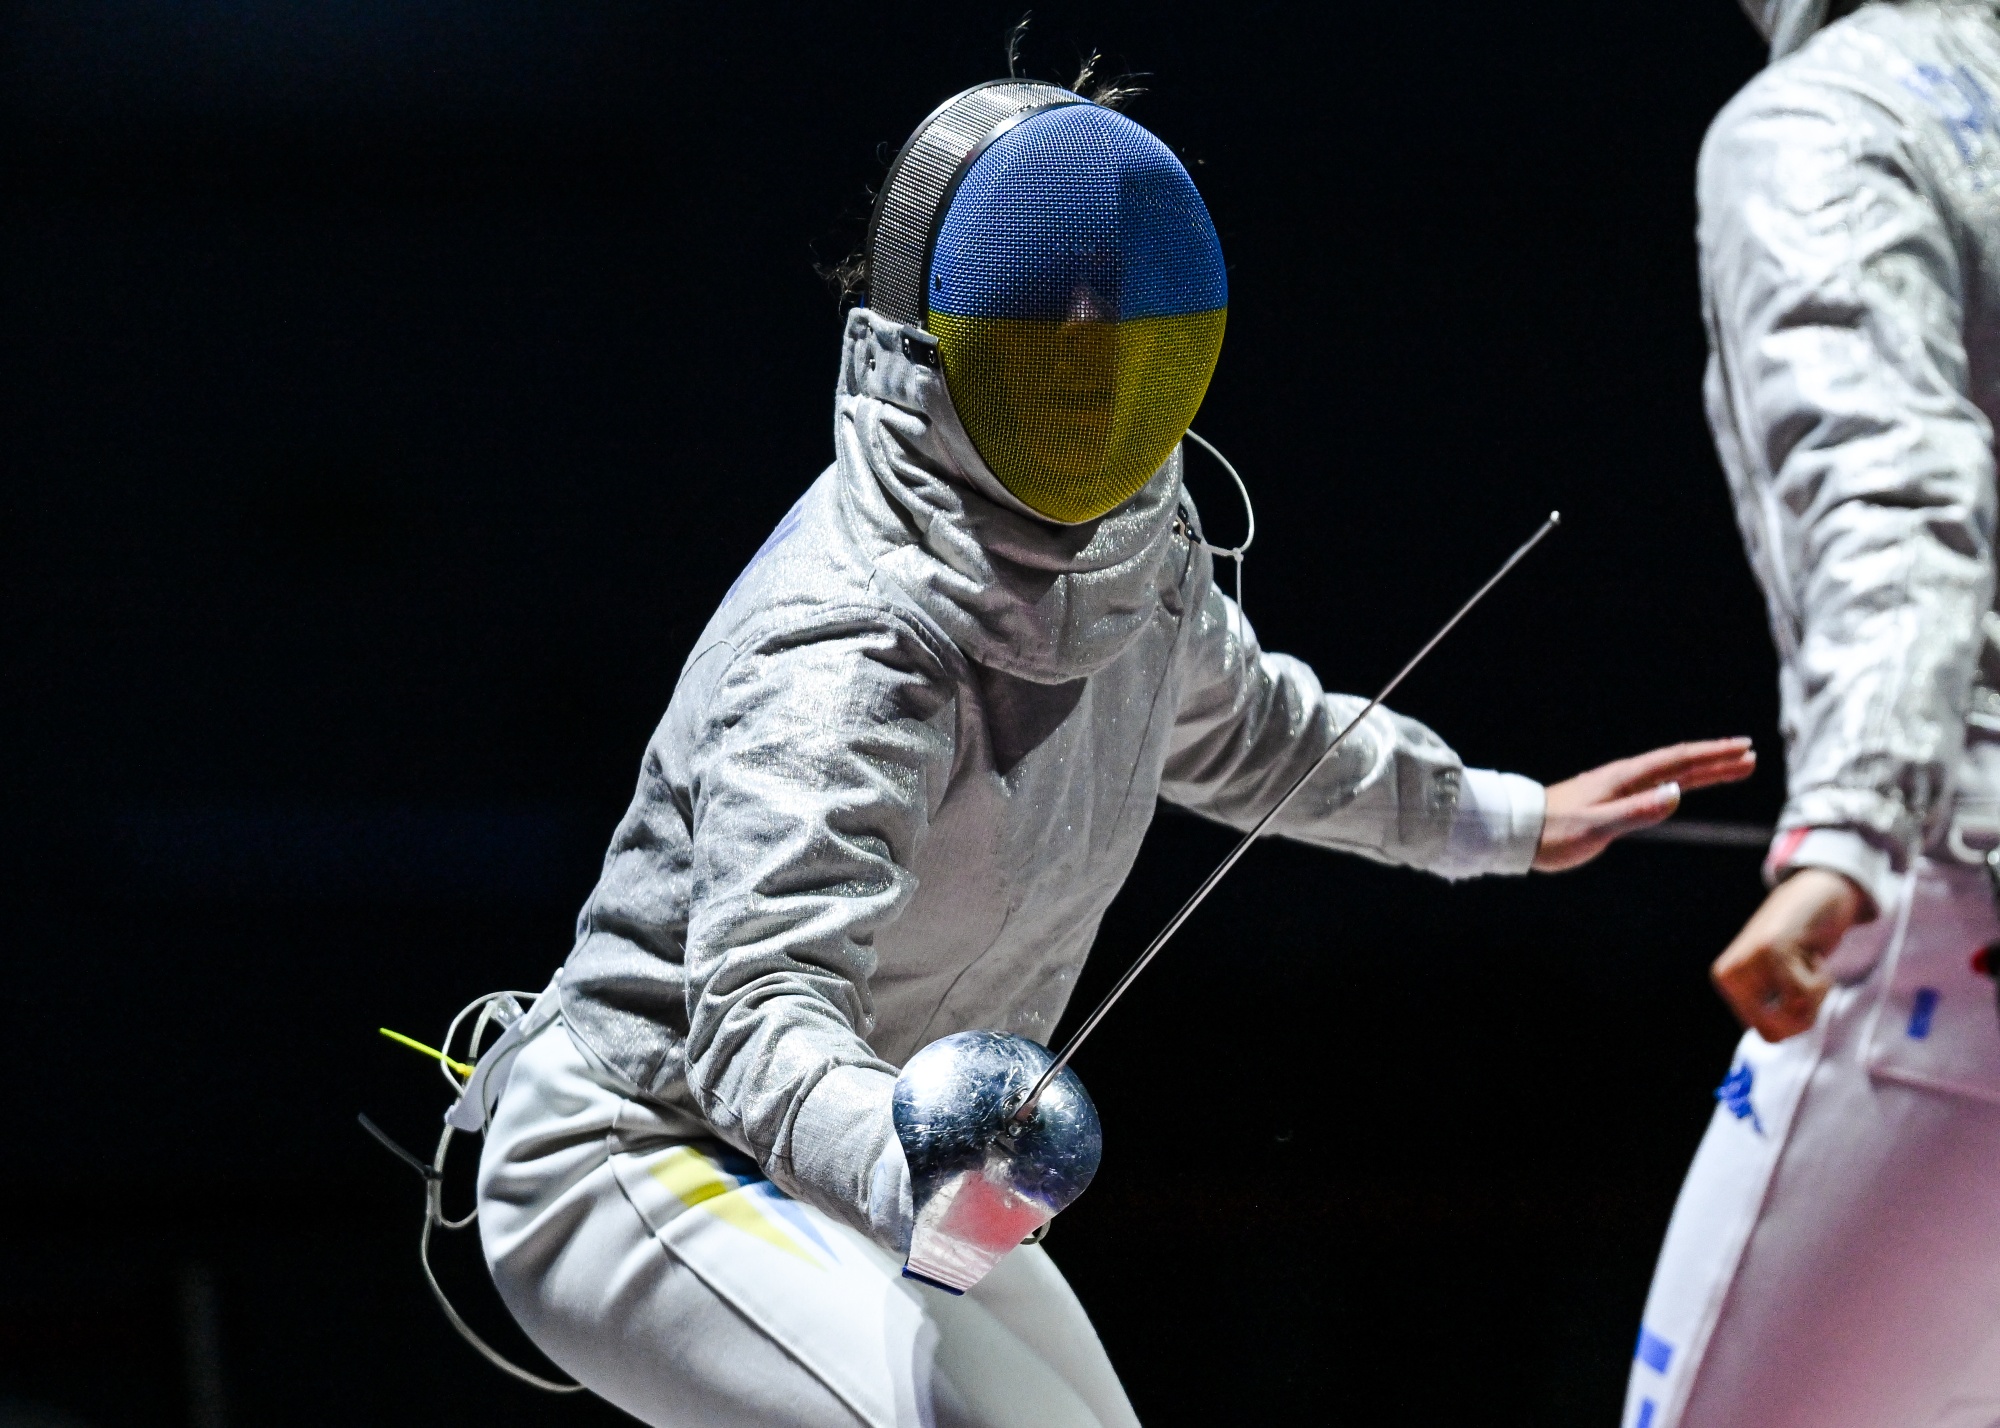 Ukrainian fencer Olga Kharlan Was Right Not To Shake Russian Opponents Hand